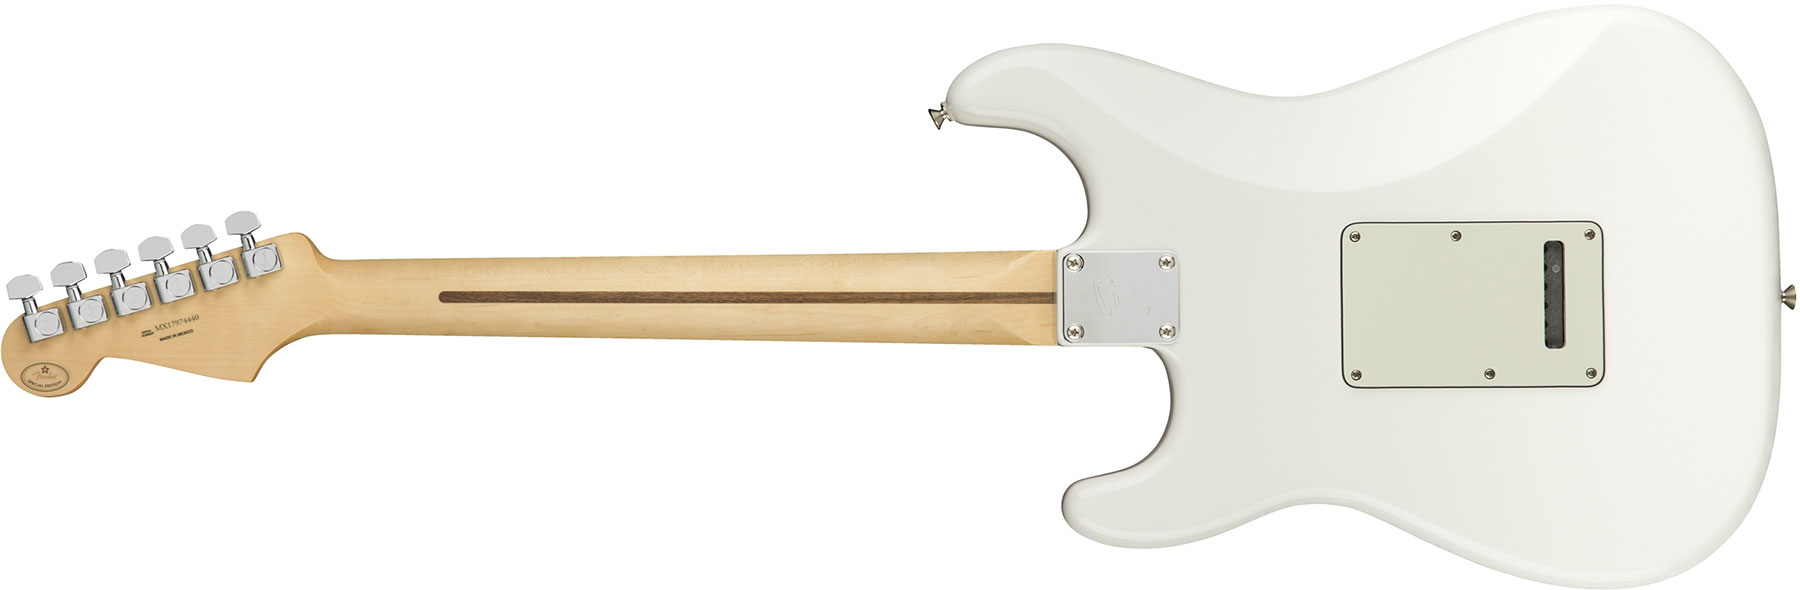 Fender Strat Player Mex Hss Pf - Polar White - E-Gitarre in Str-Form - Variation 1